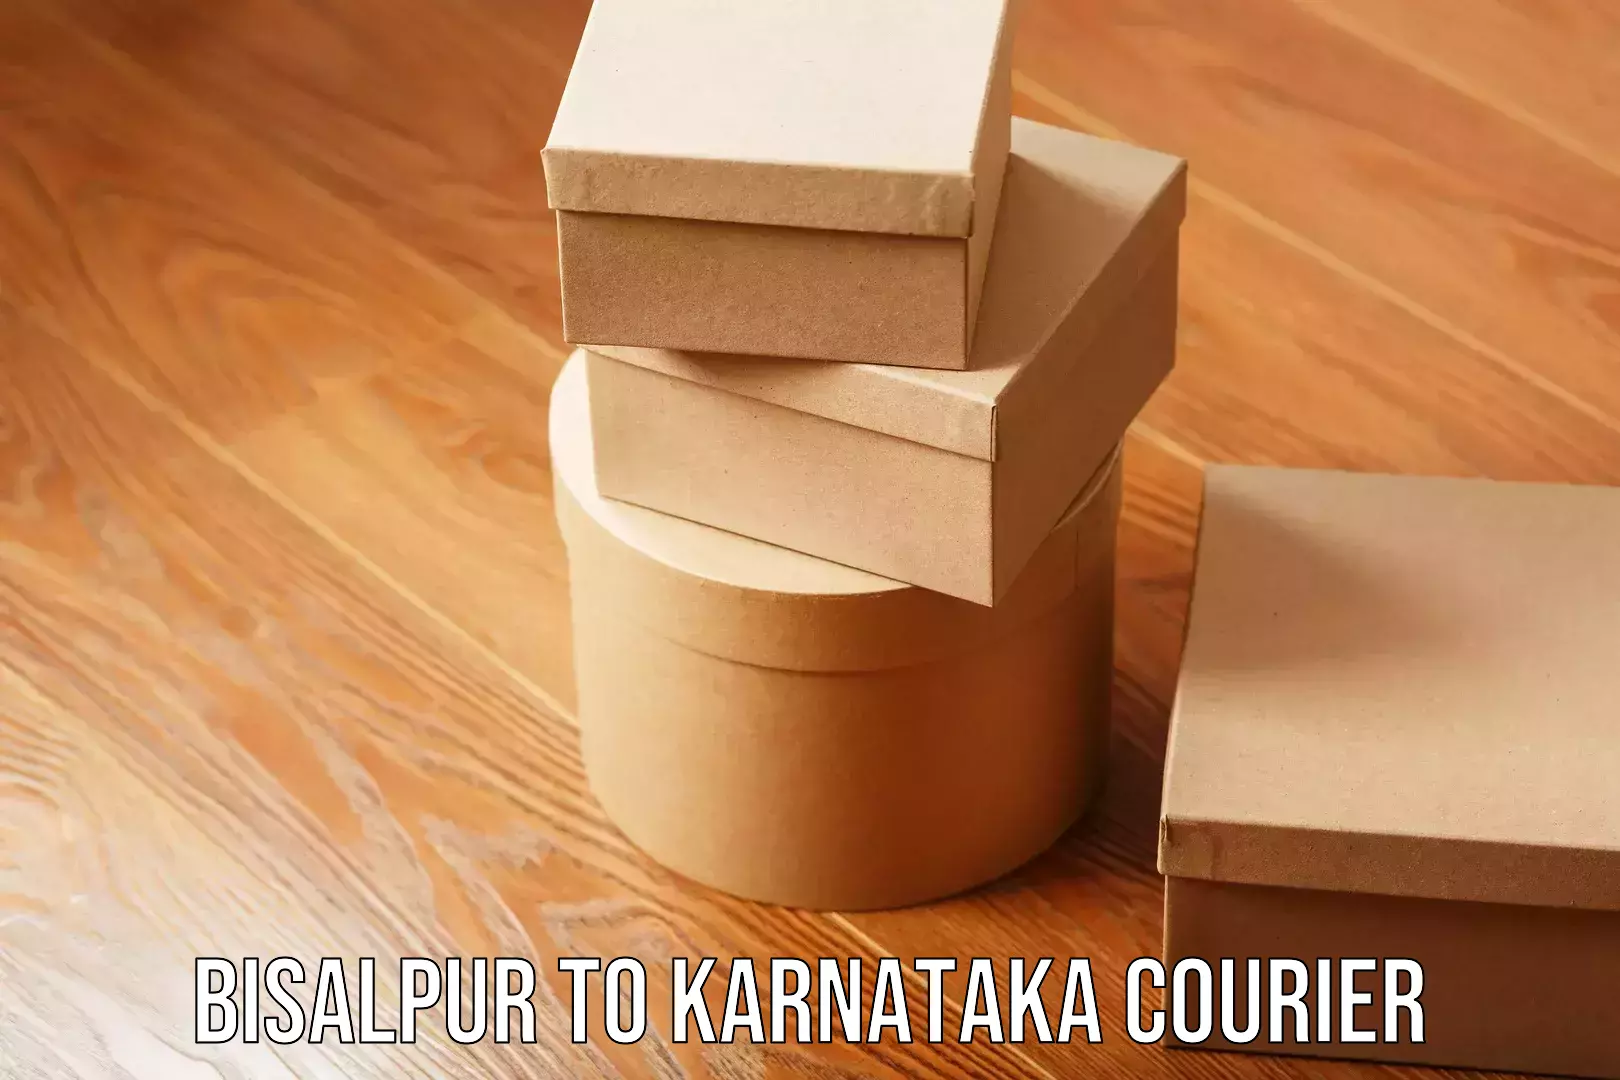 On-demand delivery Bisalpur to Karnataka